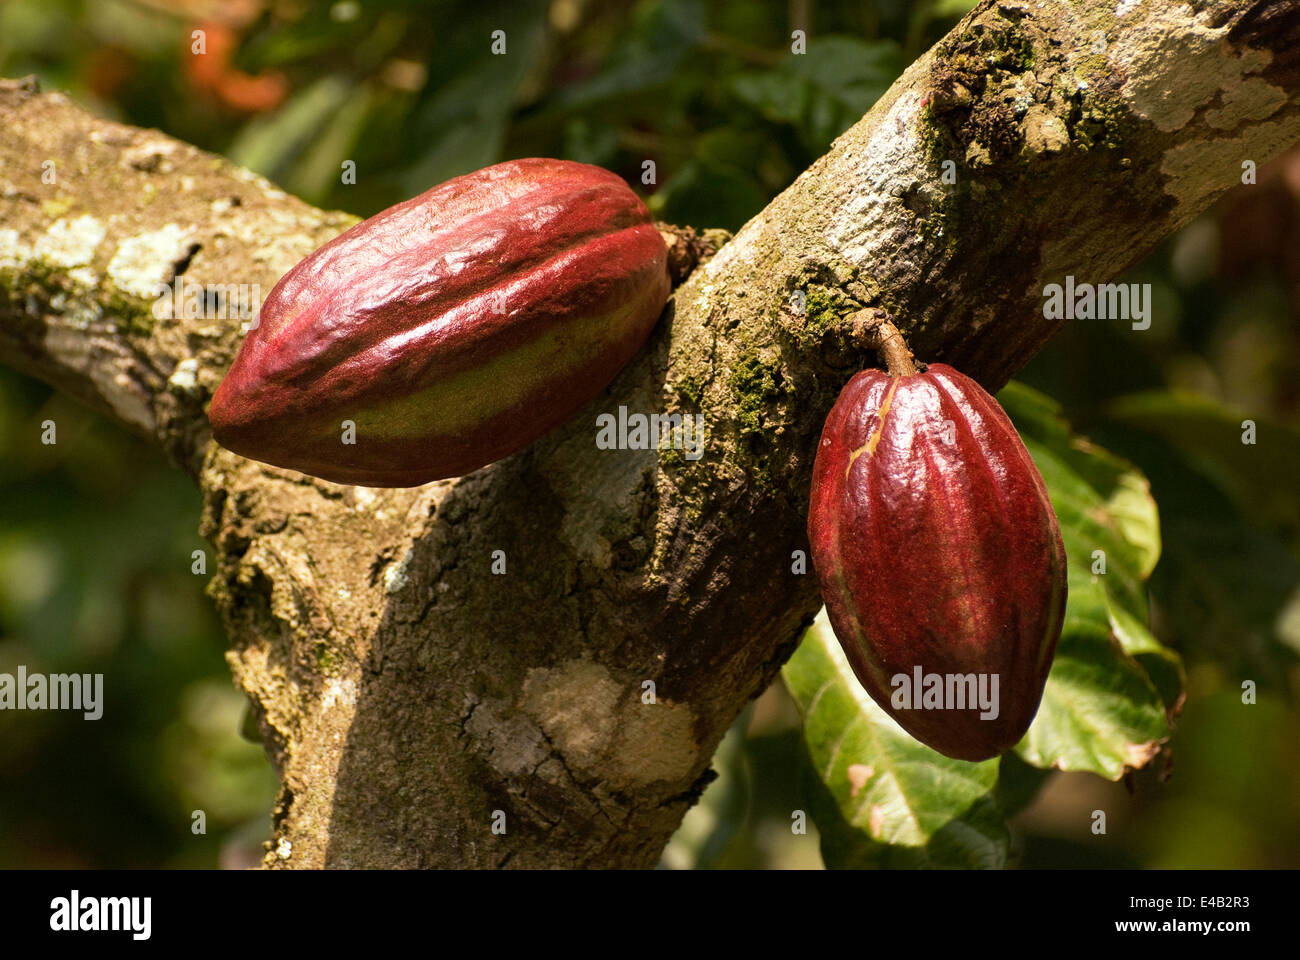 Ripe cacao beans on the wood. Venezuela Stock Photo